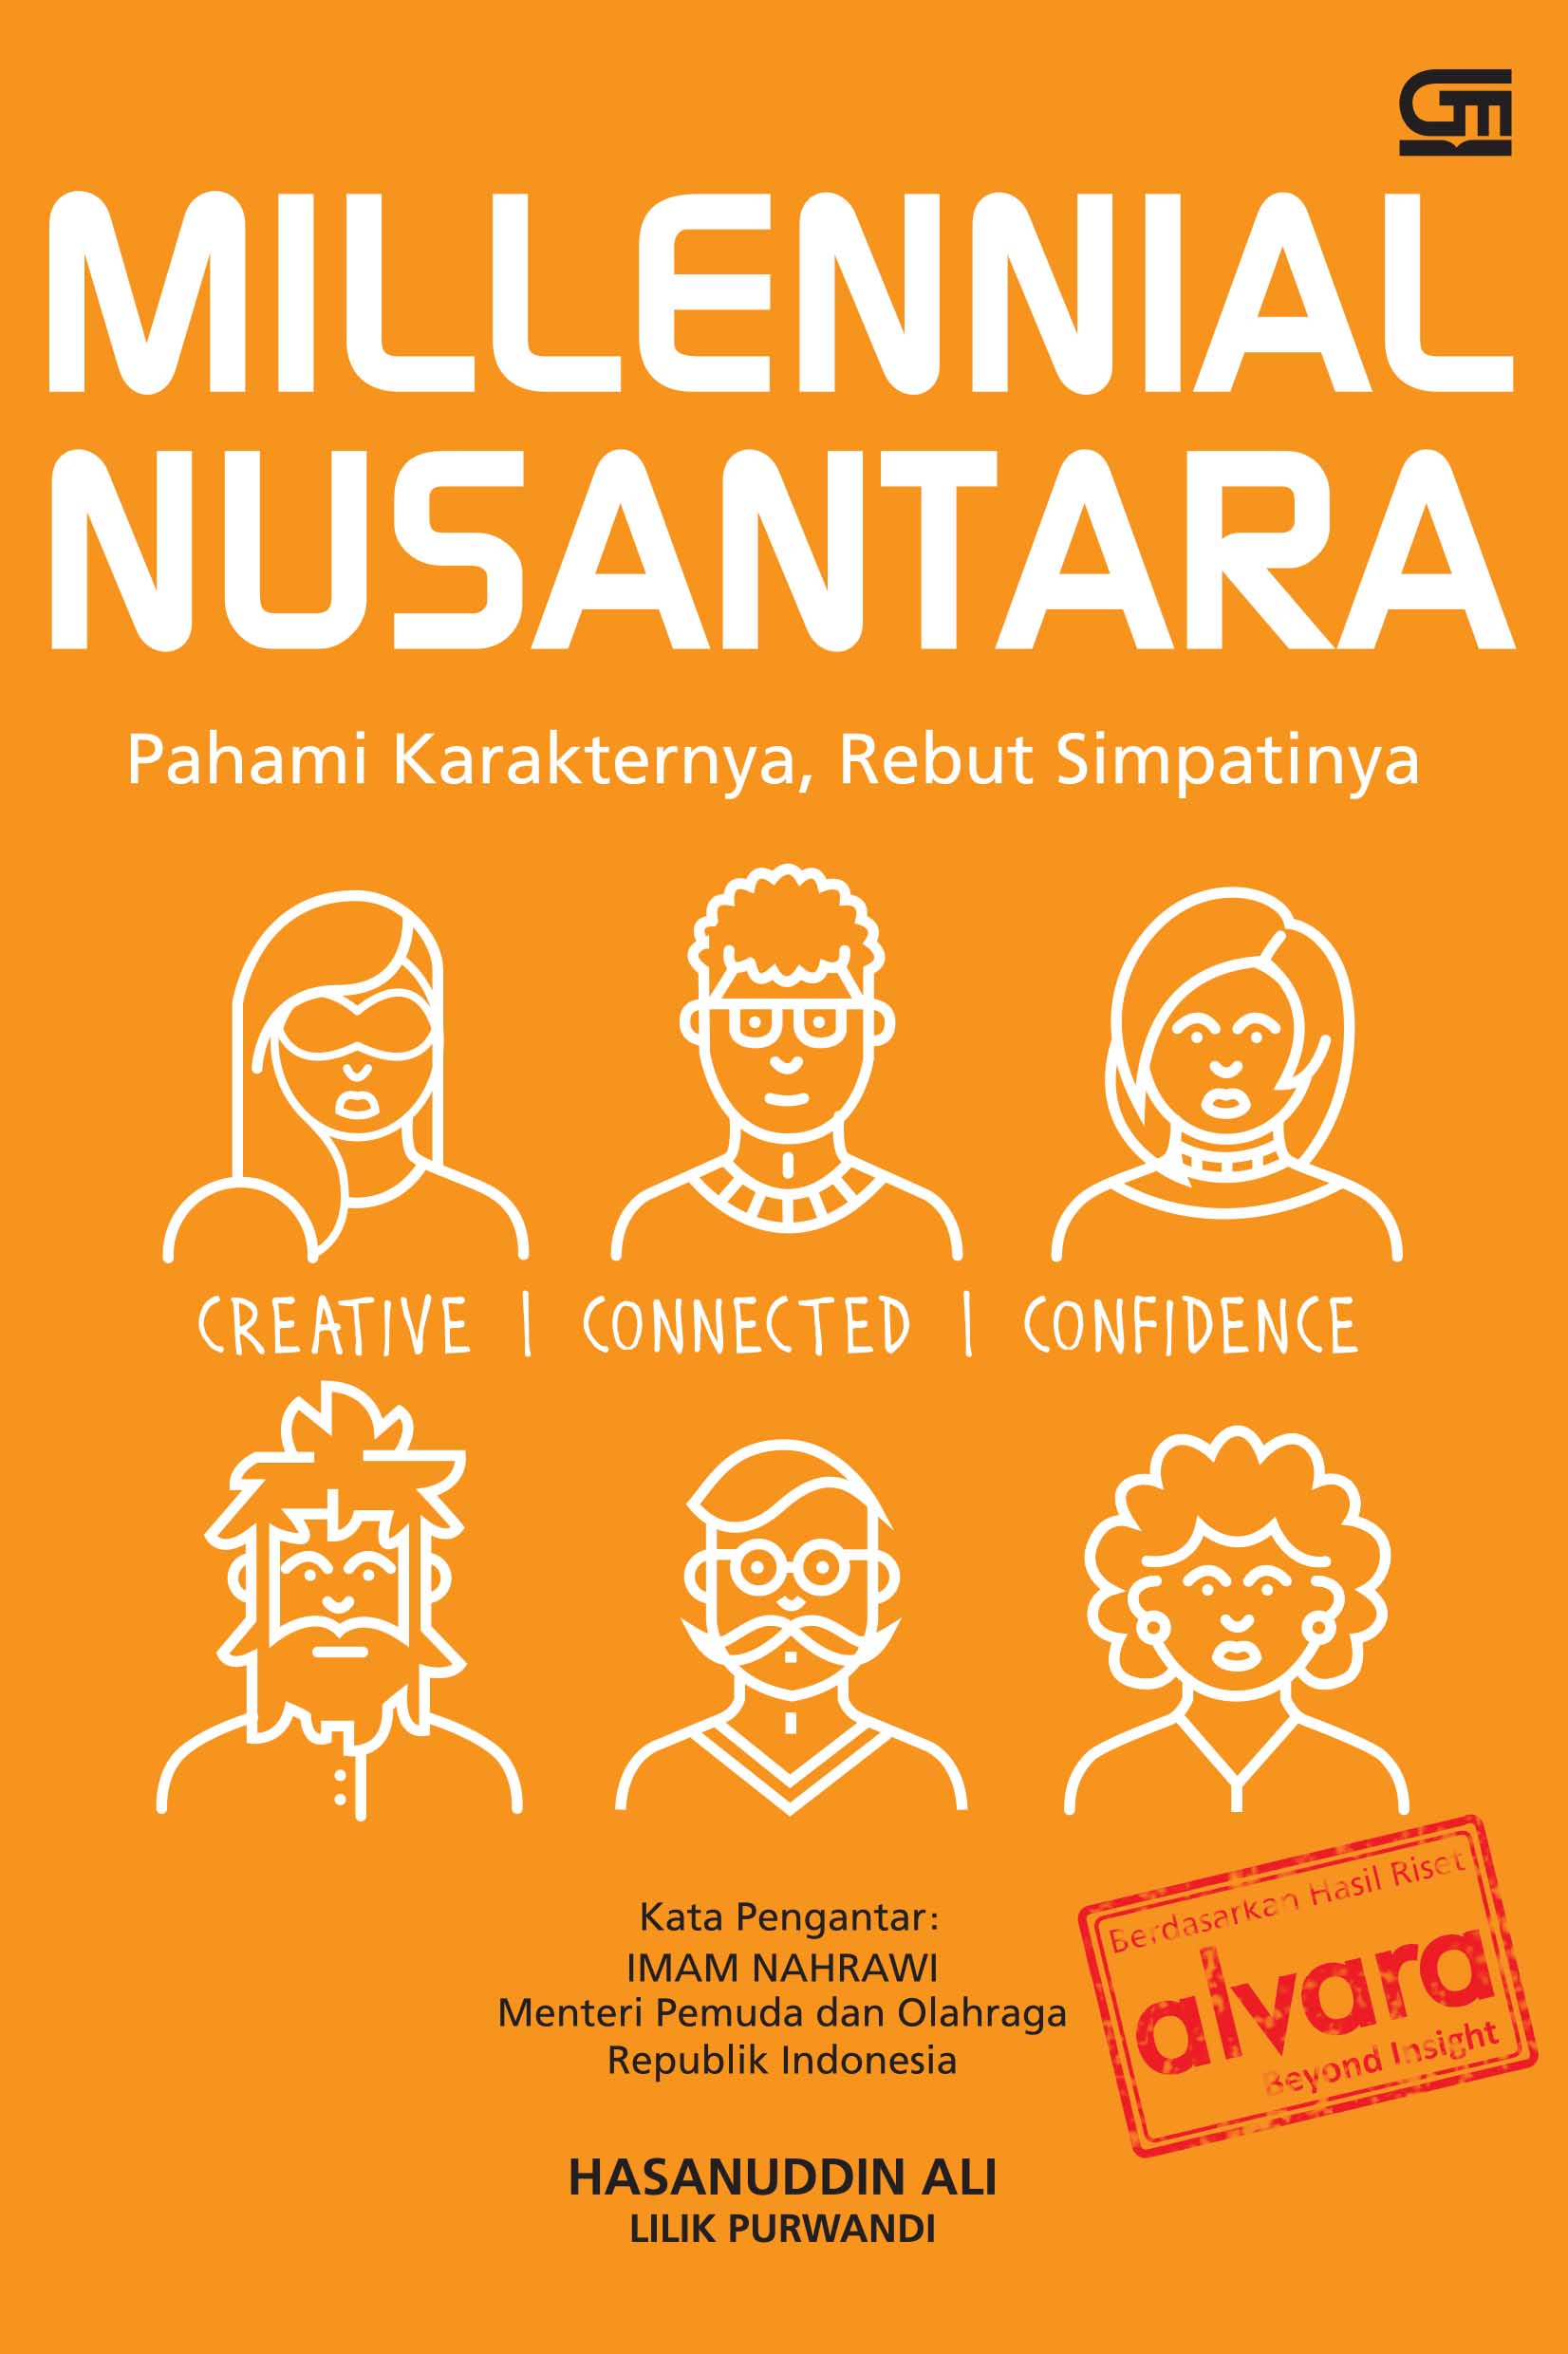 Millennial Nusantara